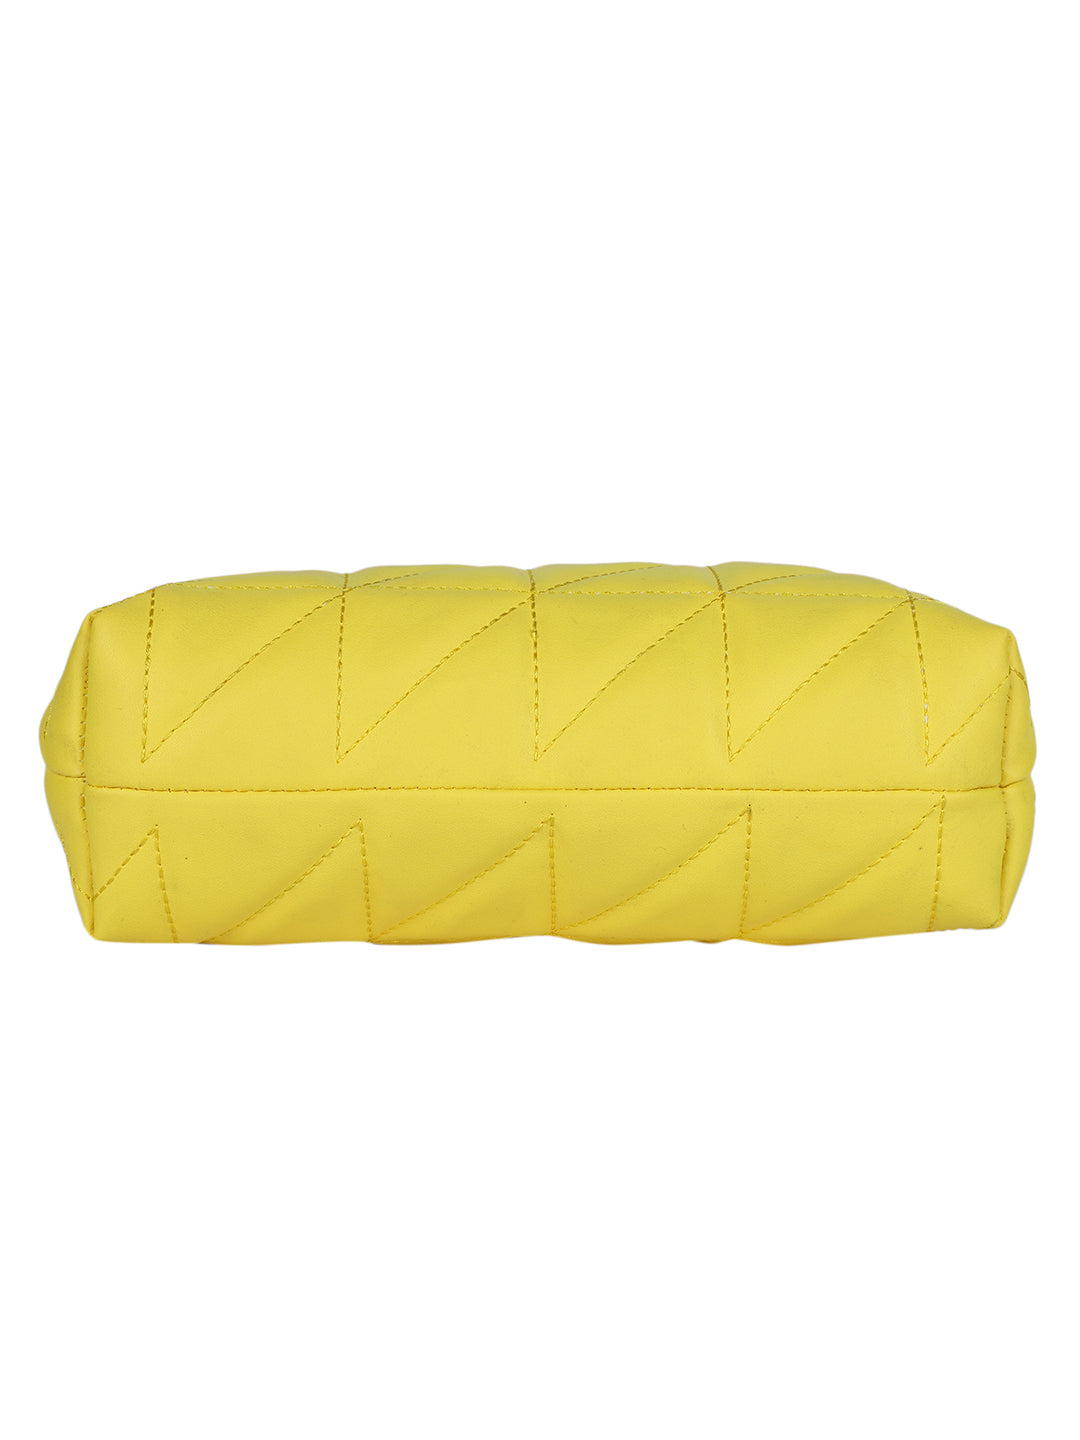 MINI WESST Women's Yellow Shoulder & Sling Bag Both